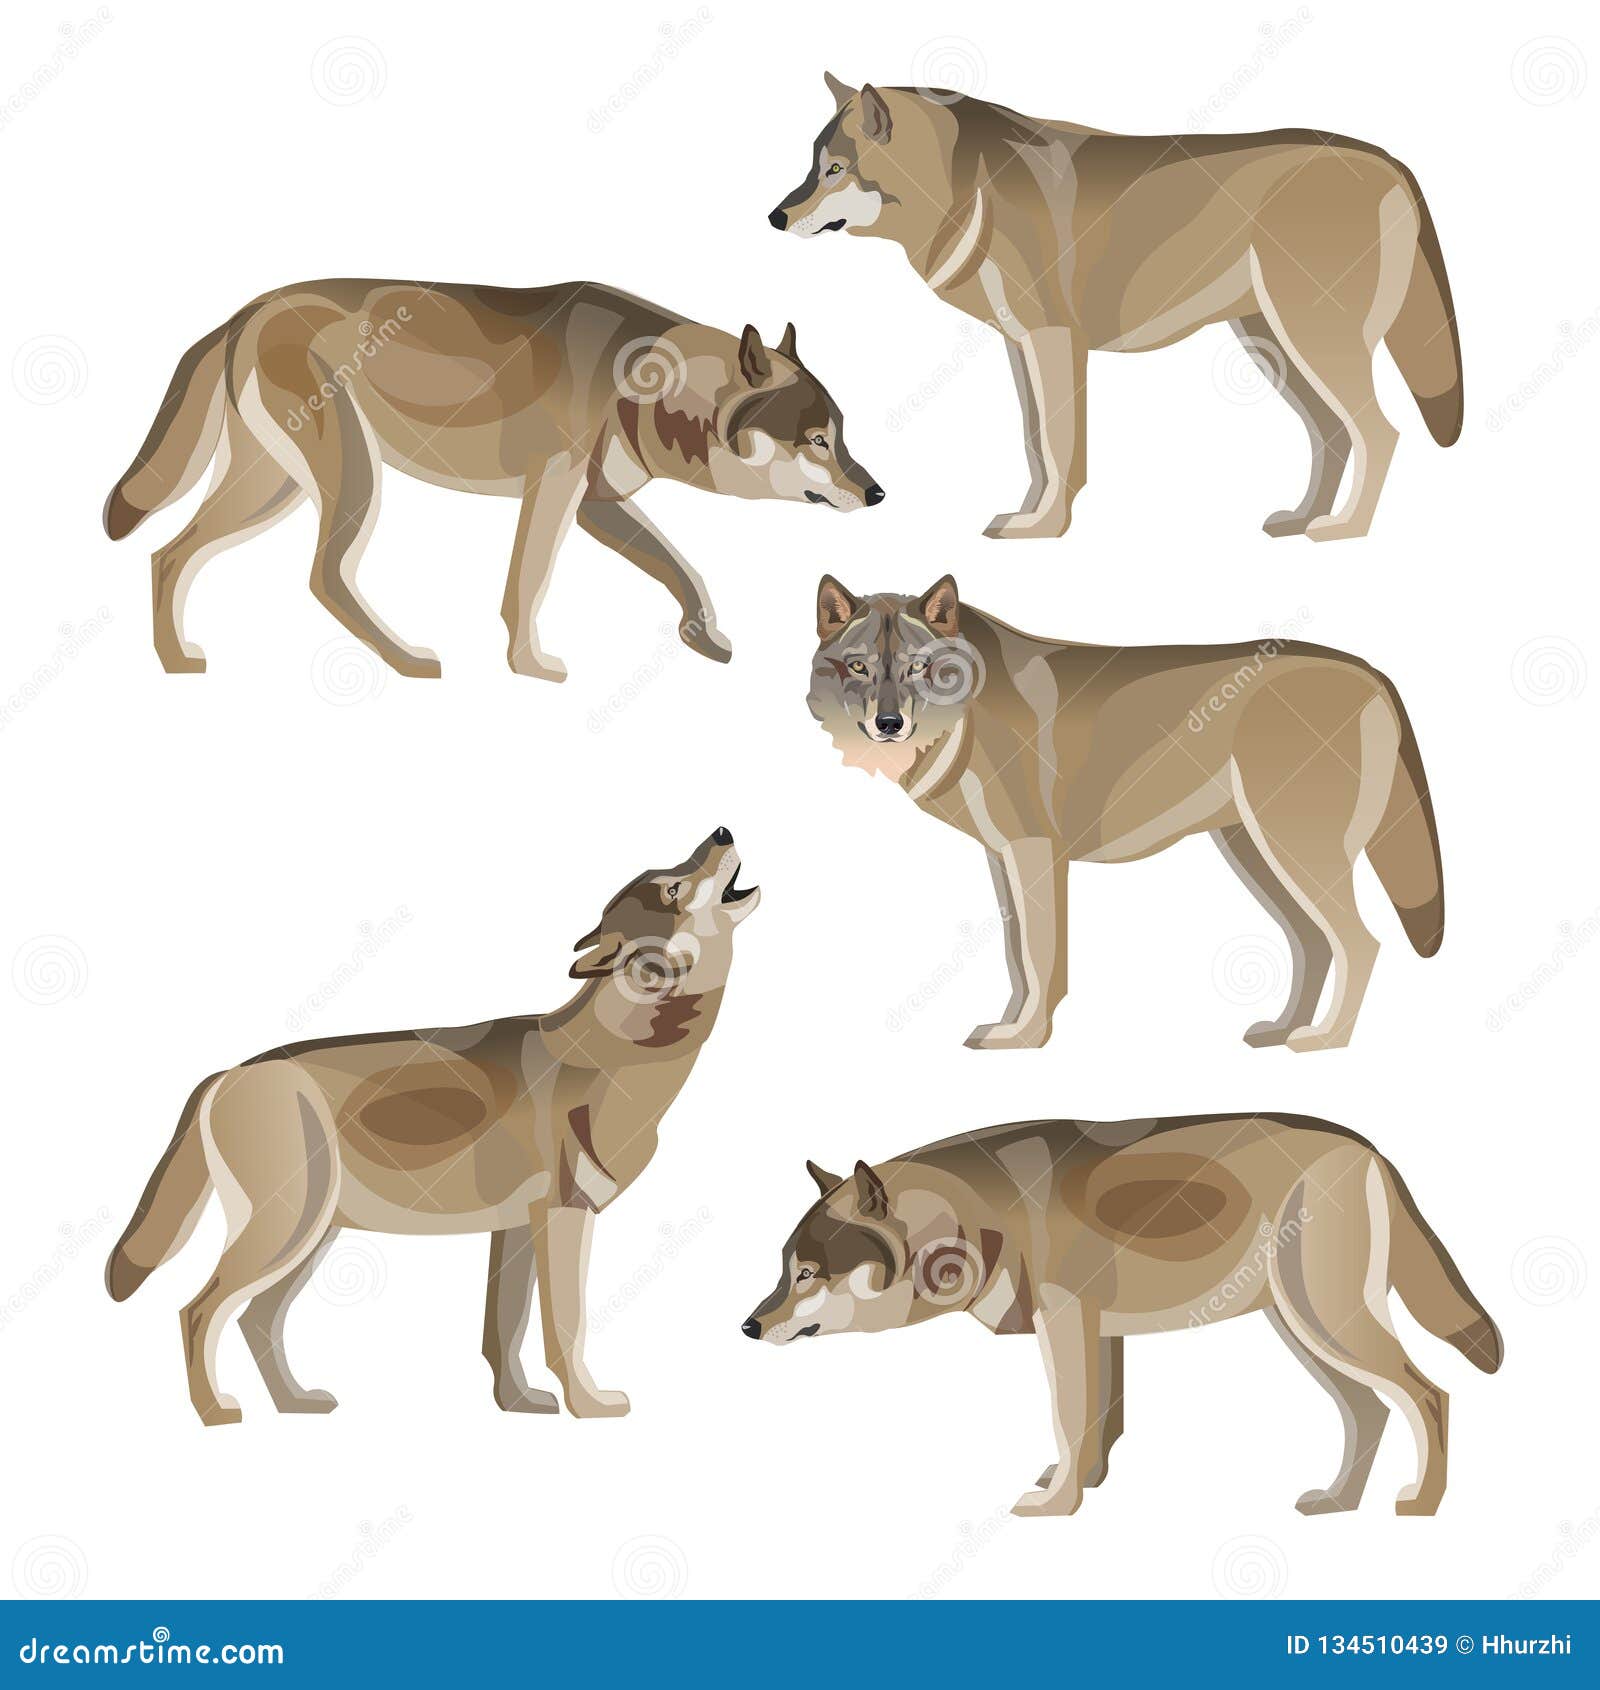 Wolves In Various Poses 3D Renders Stock Photo | CartoonDealer.com ...